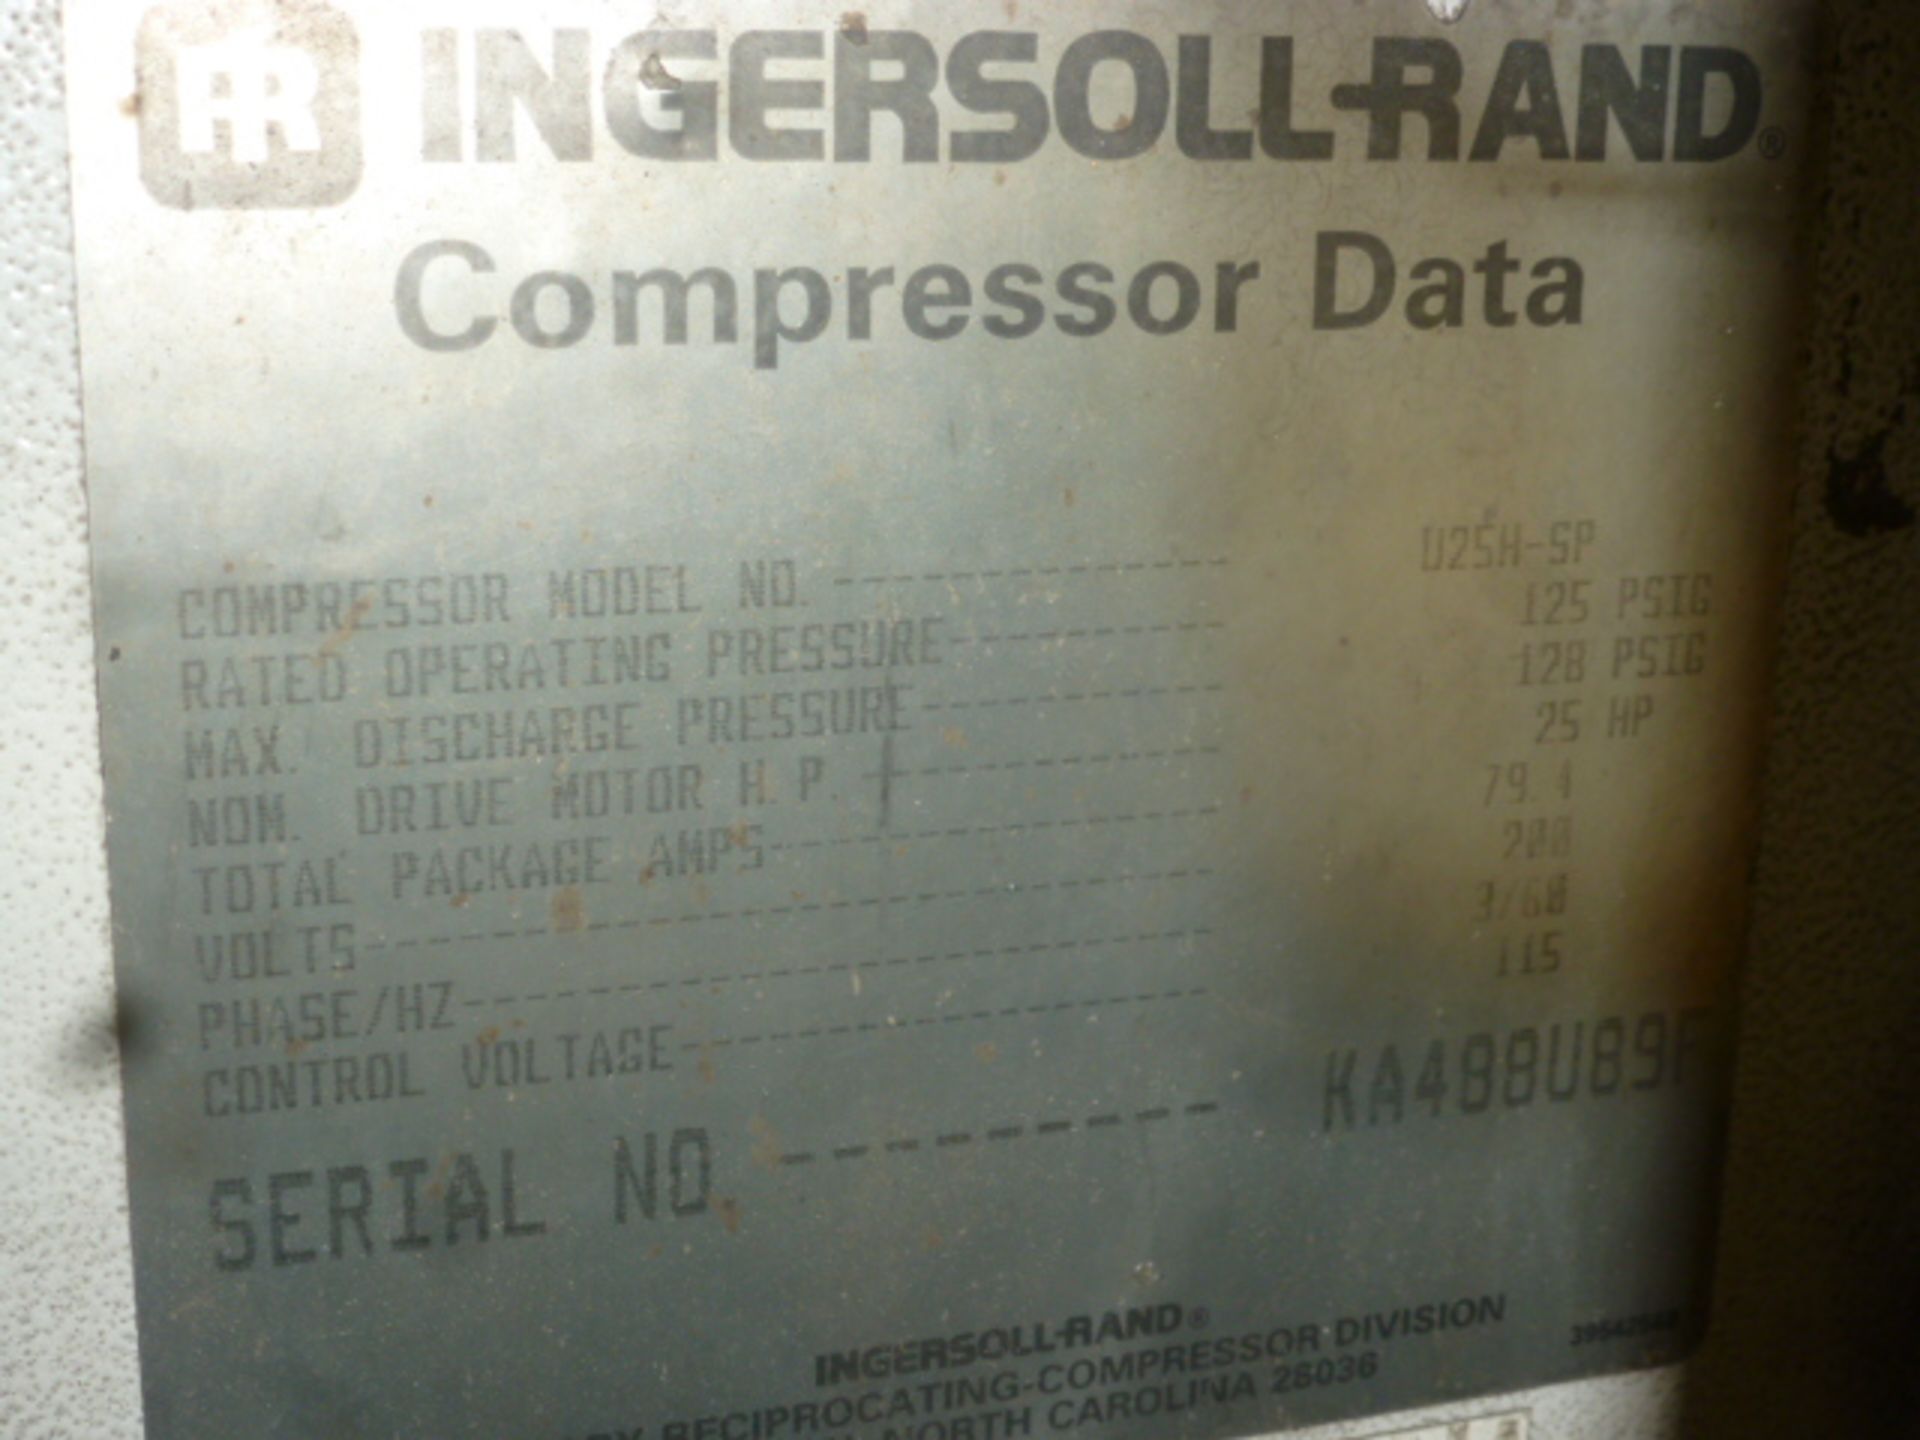 Ingersoll Rand Air Compressor w/Intellisys, m/n U25H-SP, s/n KA488U89F - Image 2 of 2